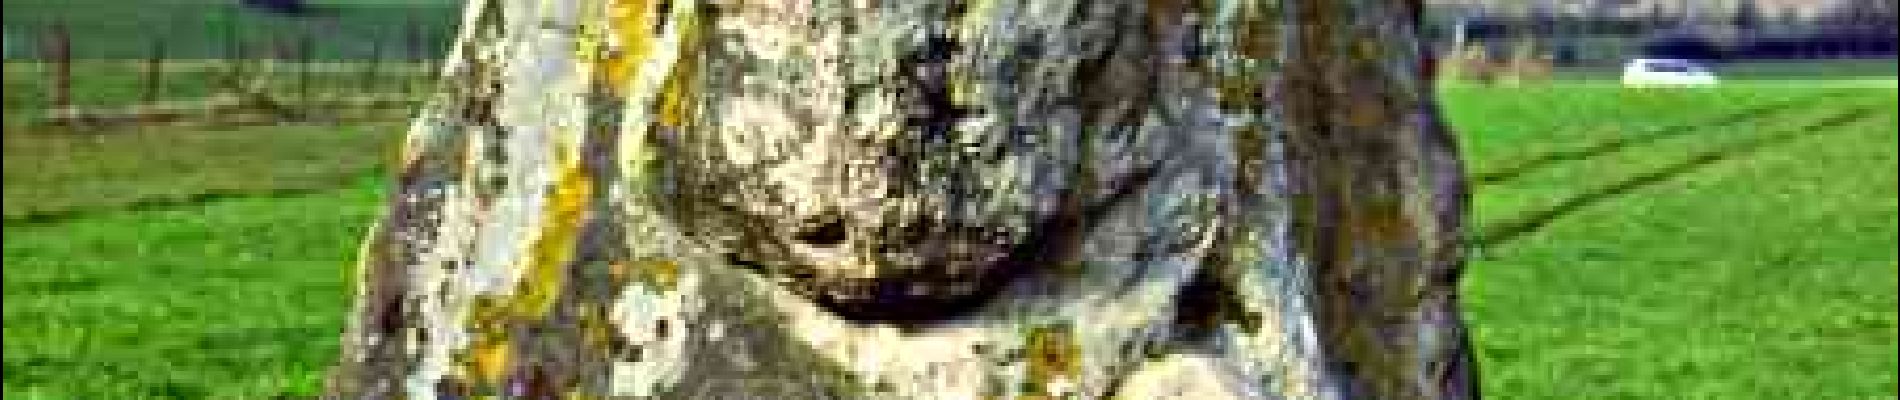 Punto di interesse Chimay - La pierre qui tourne (The Turning Stone) - Photo